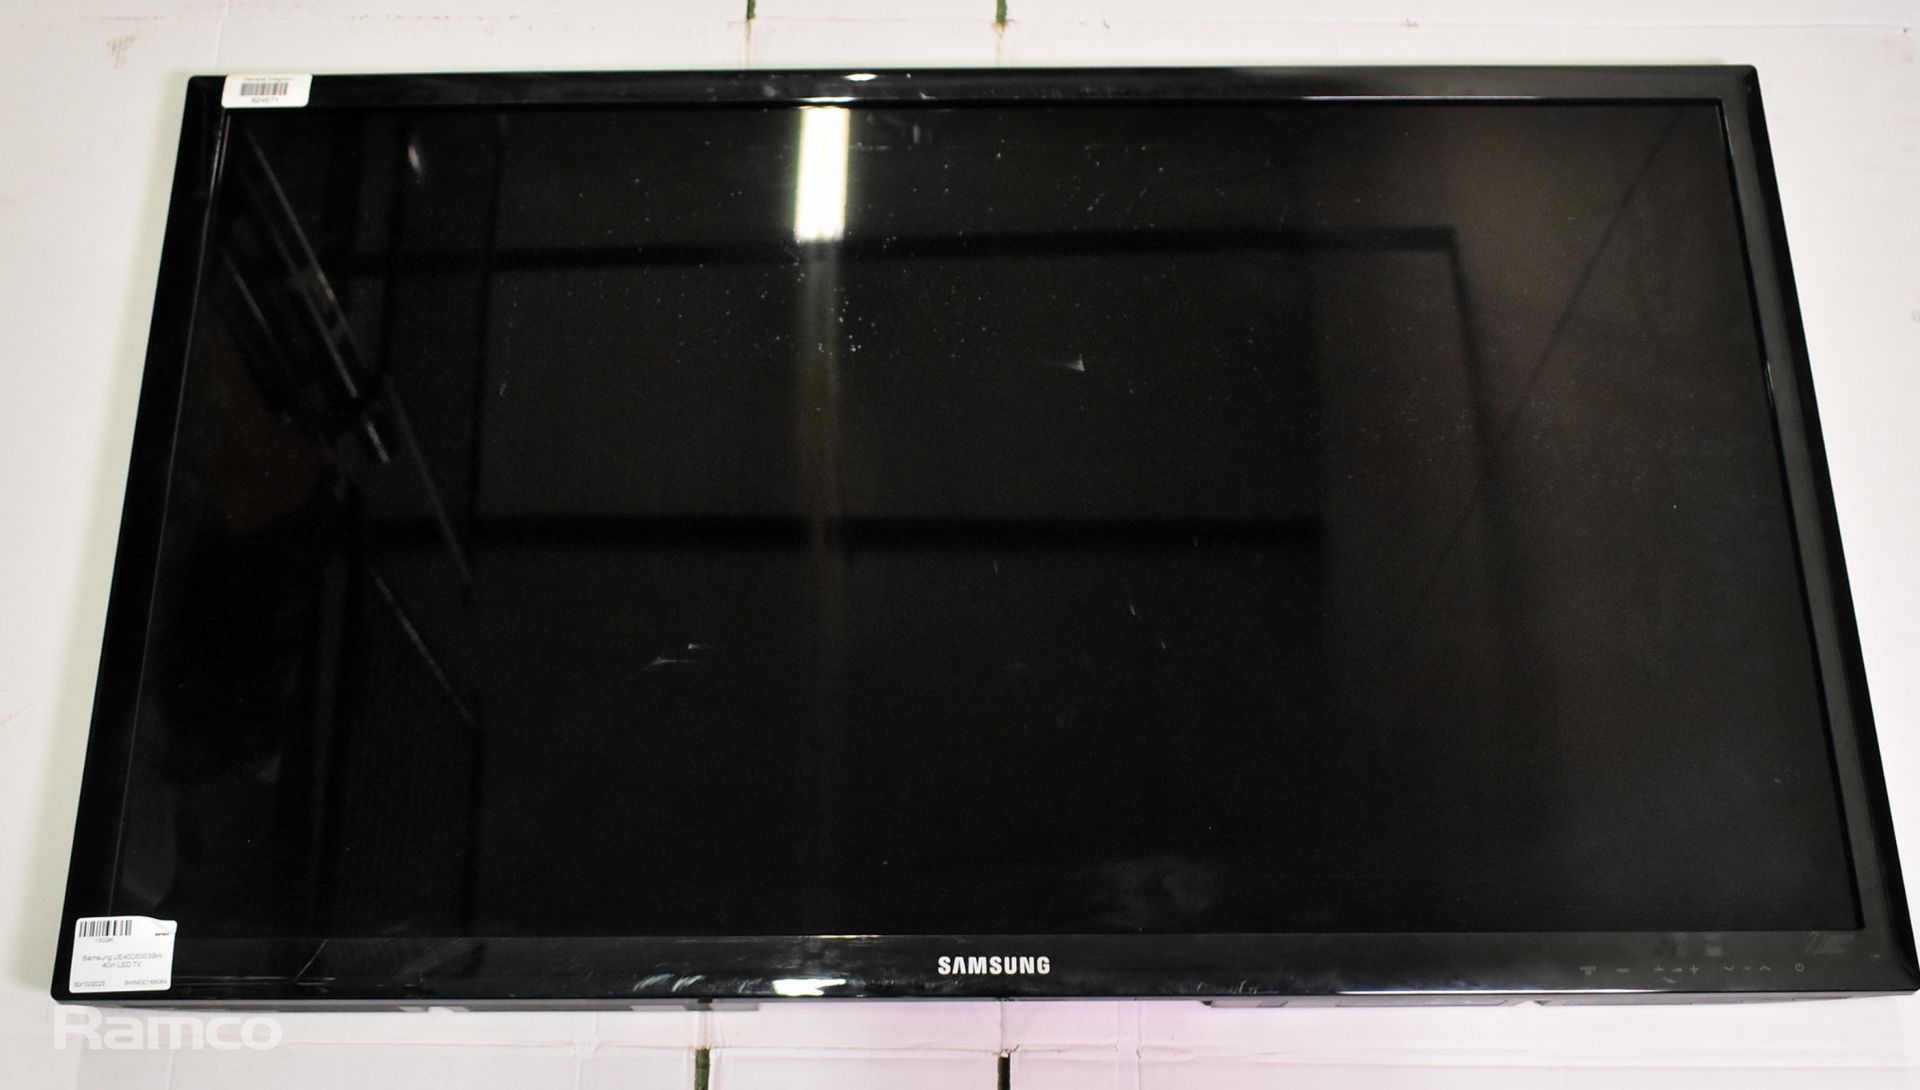 2x Samsung UE40D5003BW 40 inch LED TVs, Samsung UE40D5003BW 40 inch LED TV - Image 2 of 14